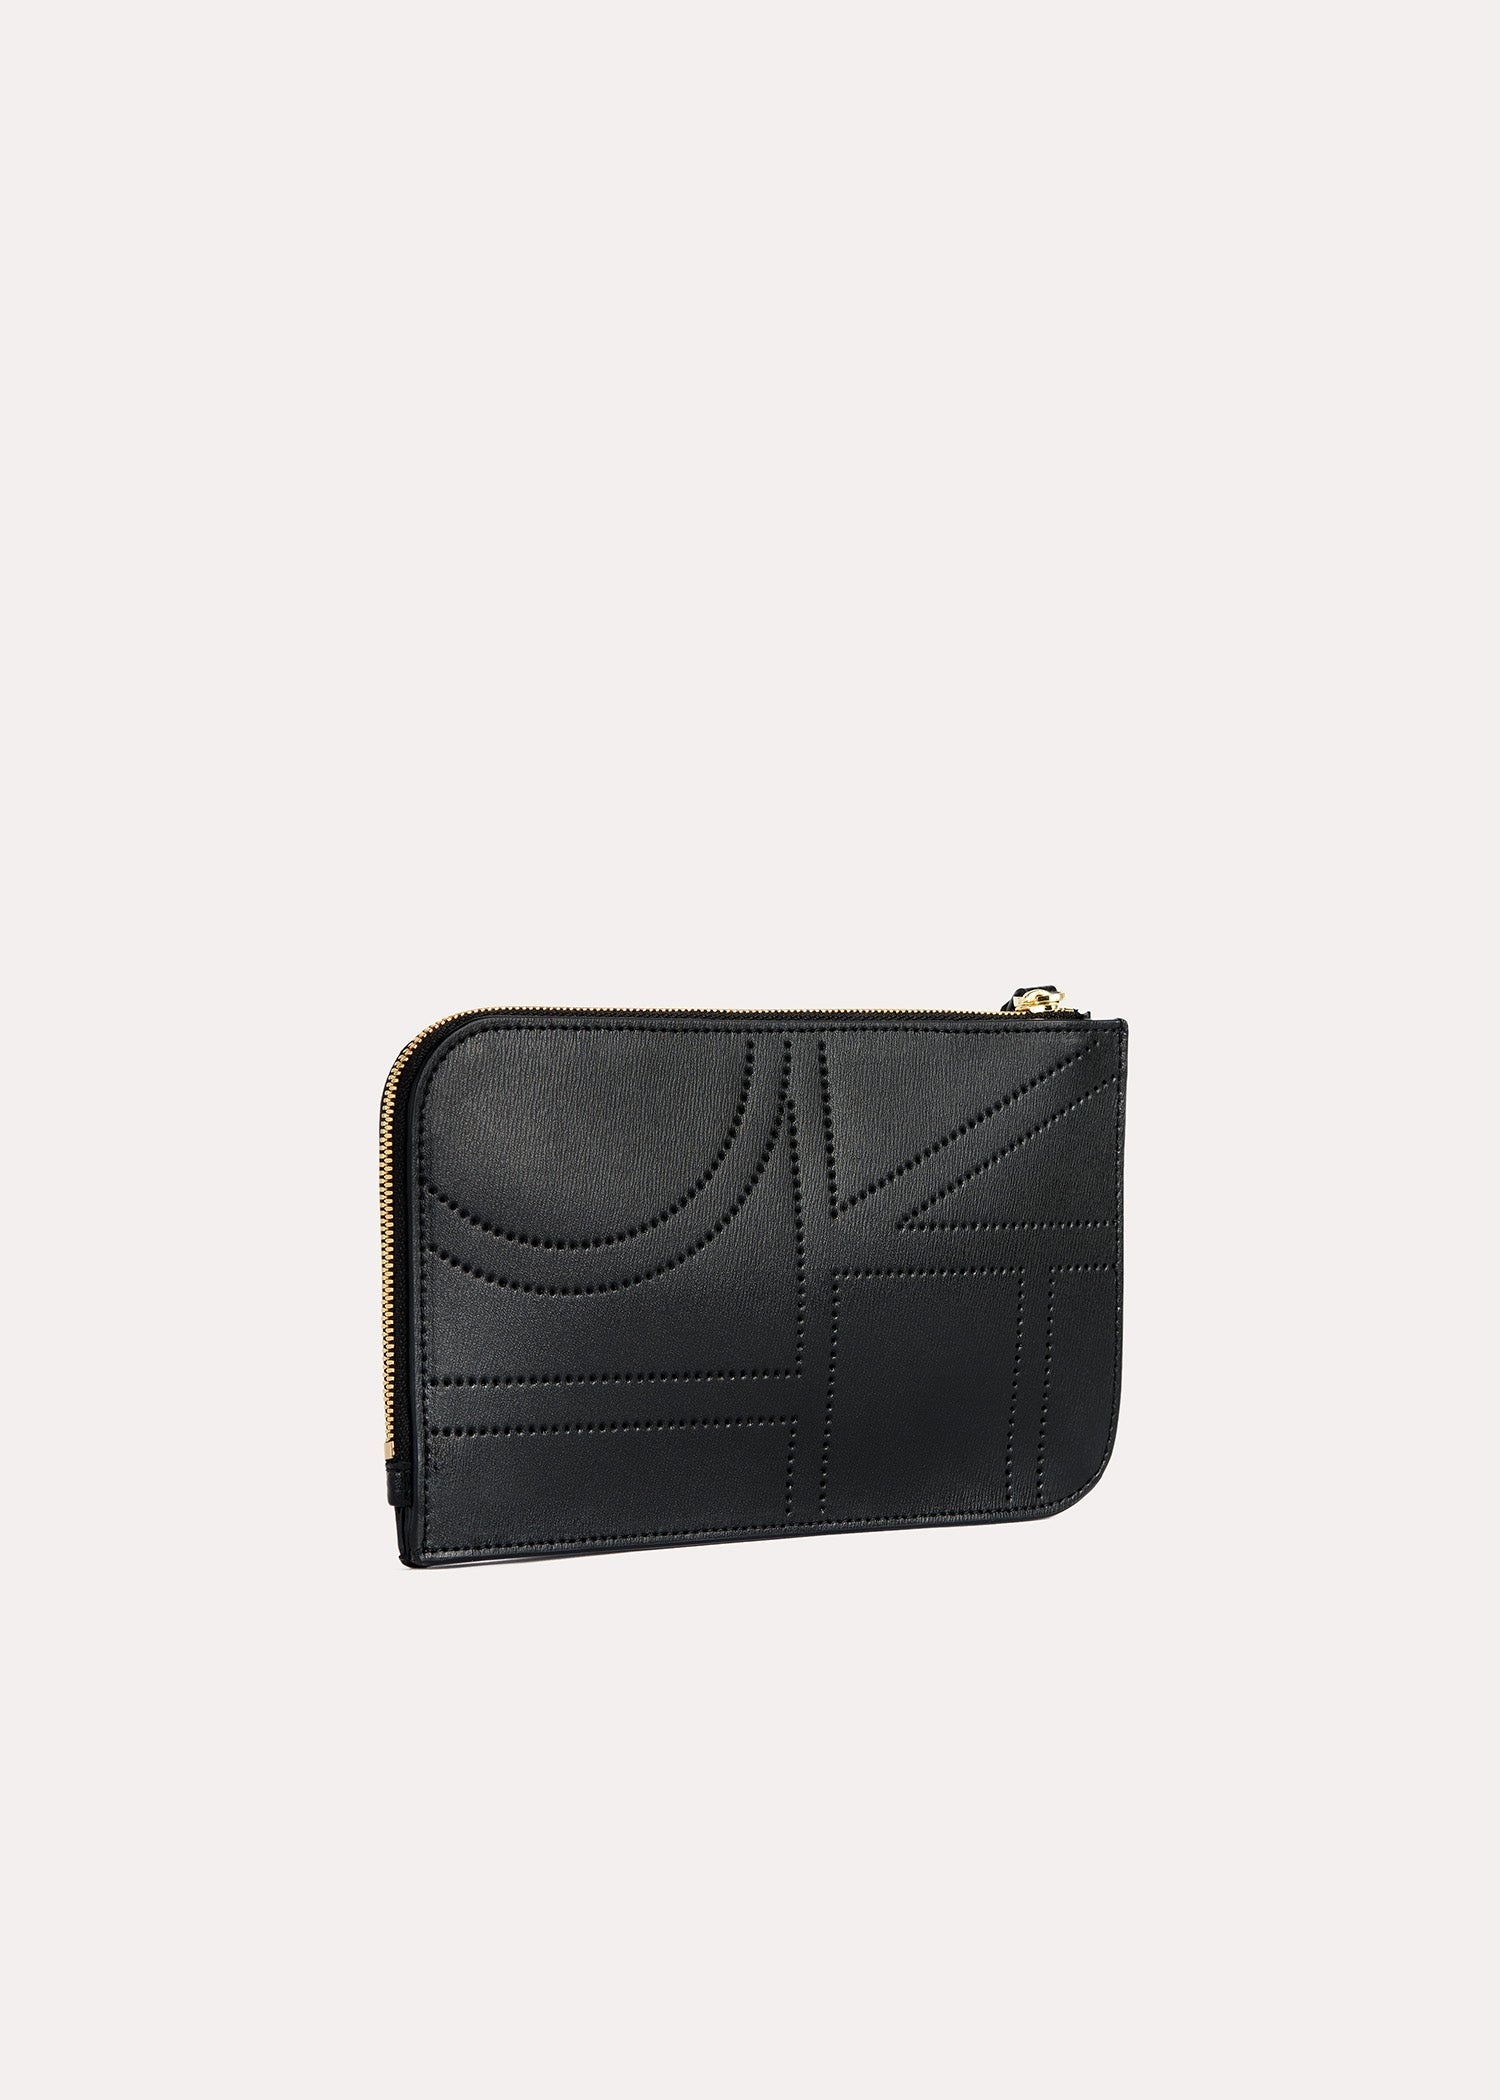 Monogram leather wristlet pouch black - 4